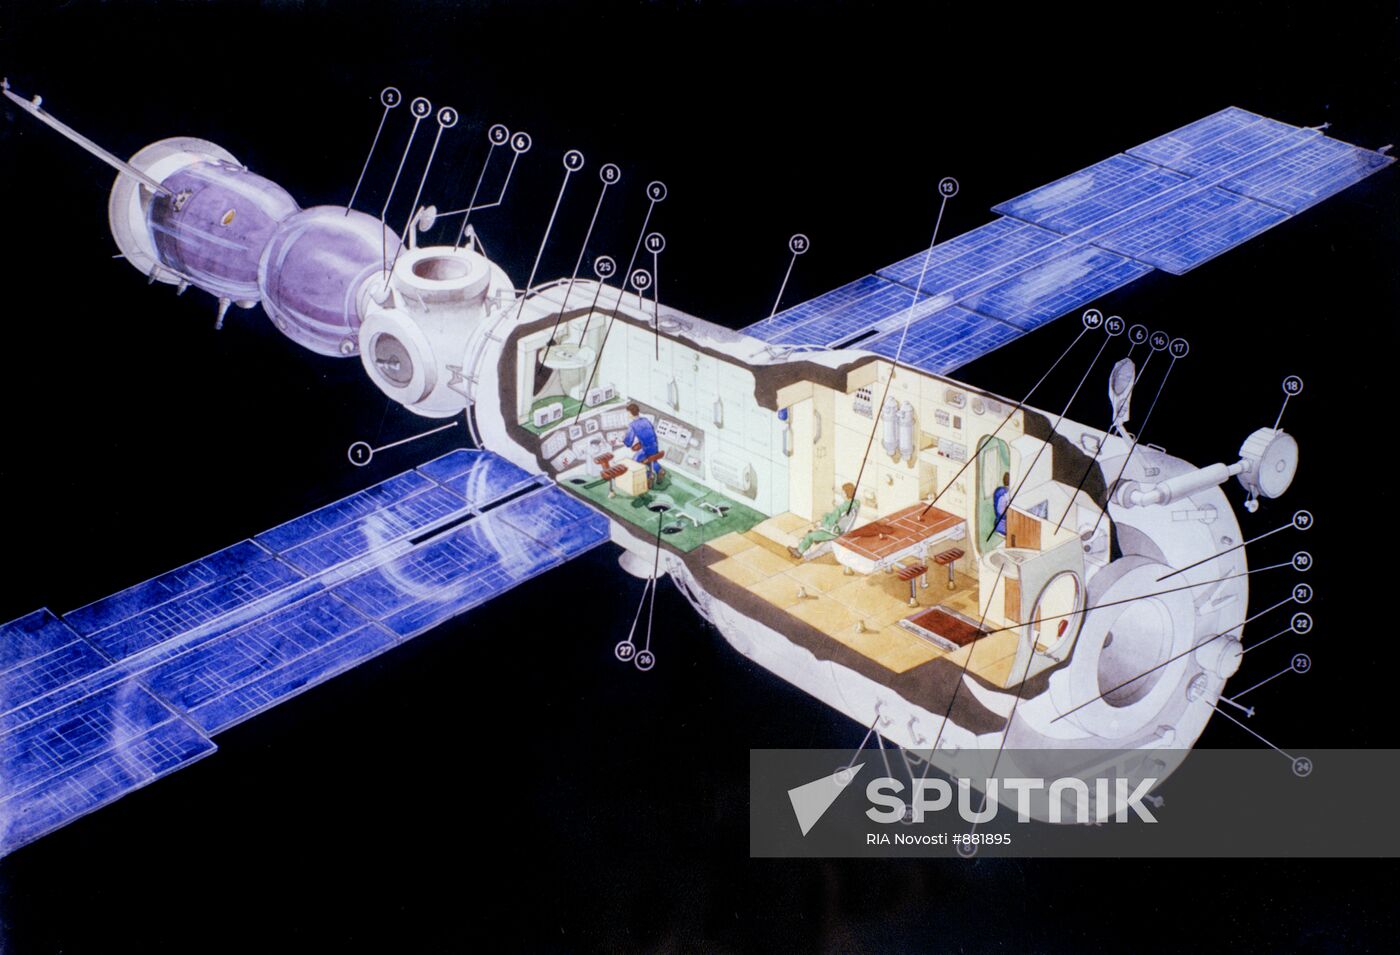 Picture-scheme depicting Mir orbital station. Reproduction